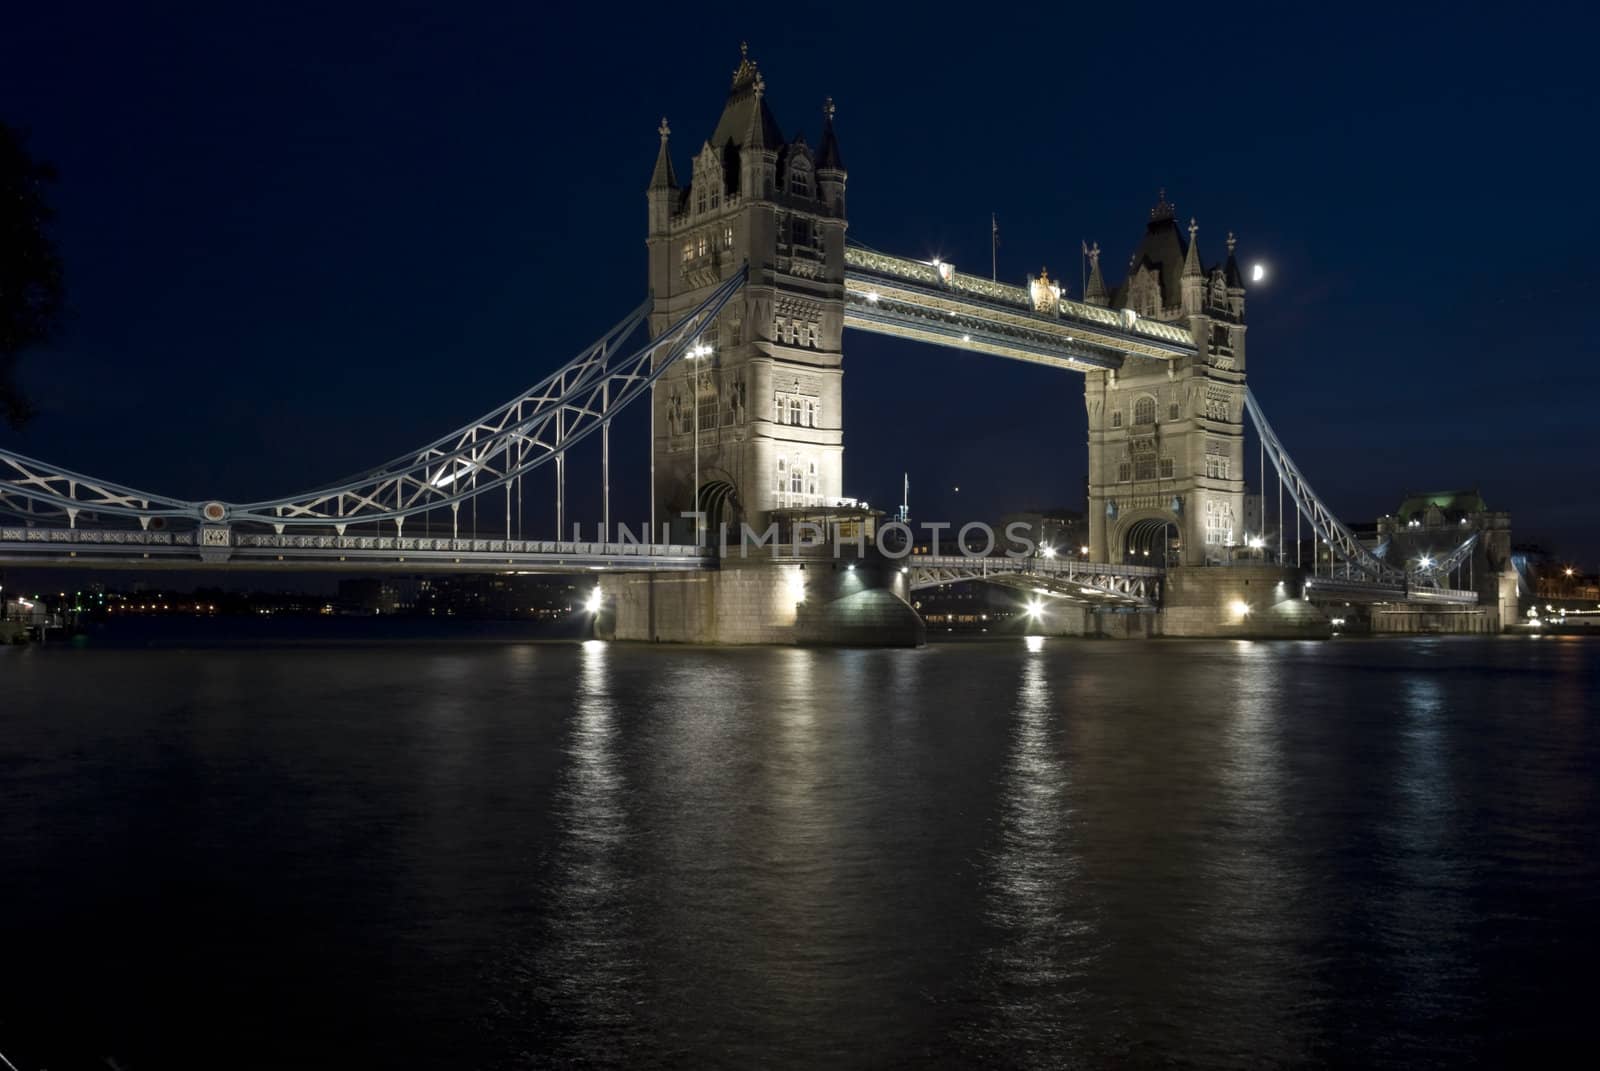 The Tower Bridge London by hanusst